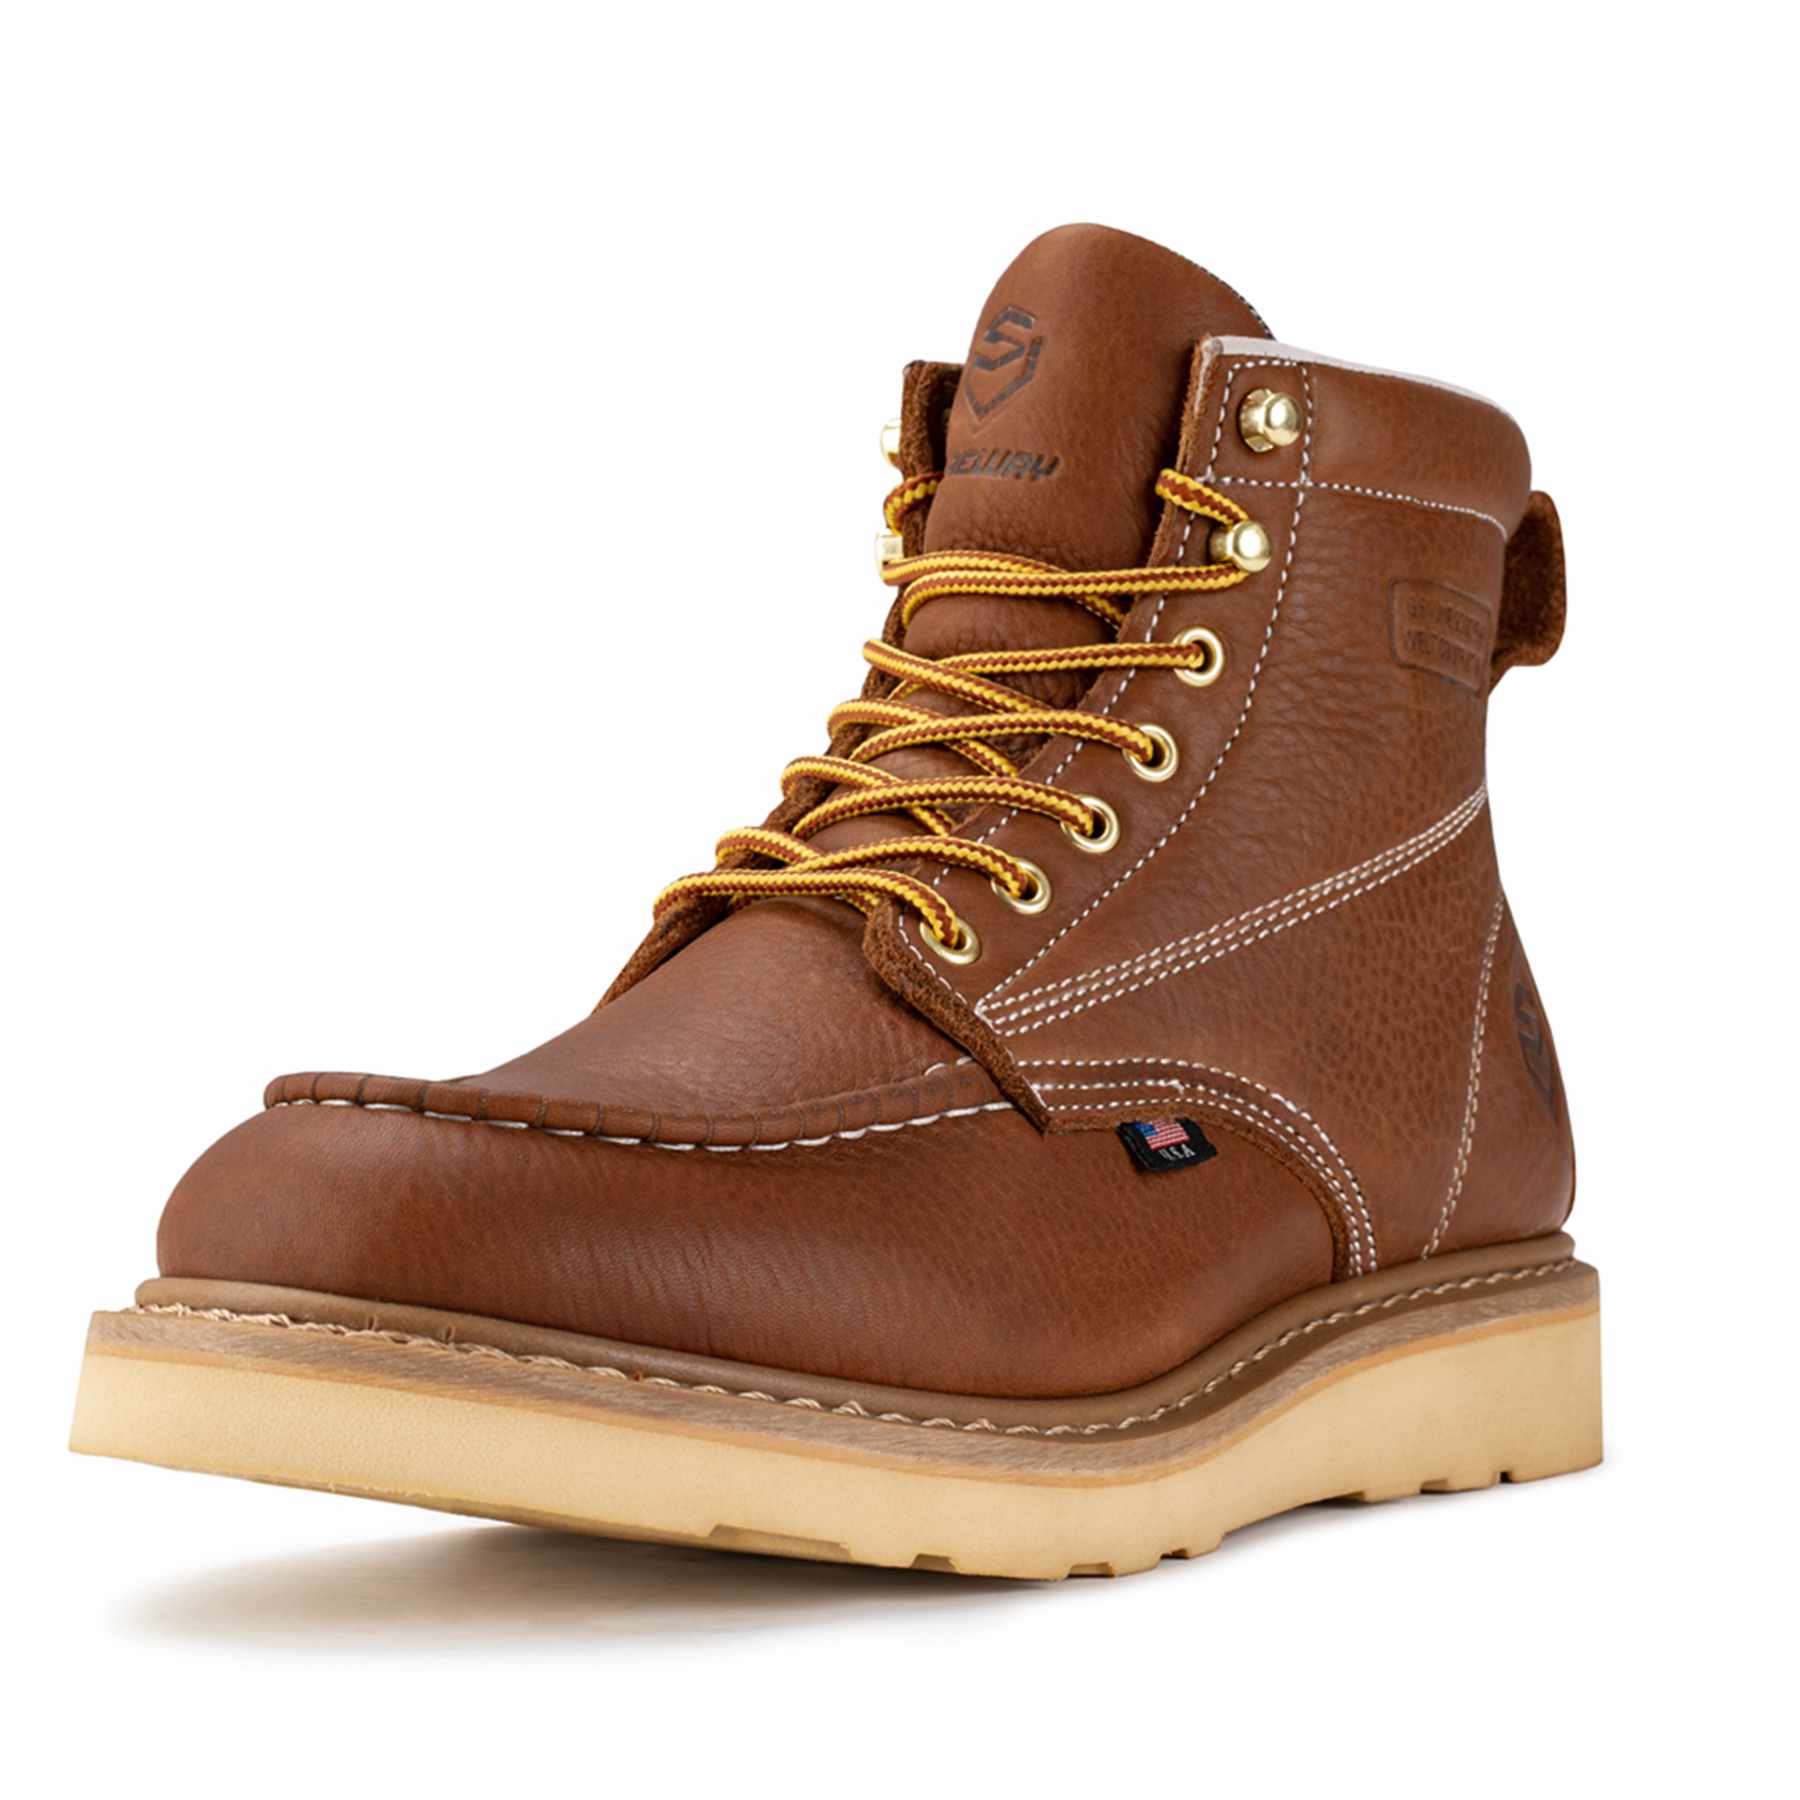 SUREWAY 6” Wedge Moc Toe Work Boots for Men - Soft Toe 109.99 SUREWAY